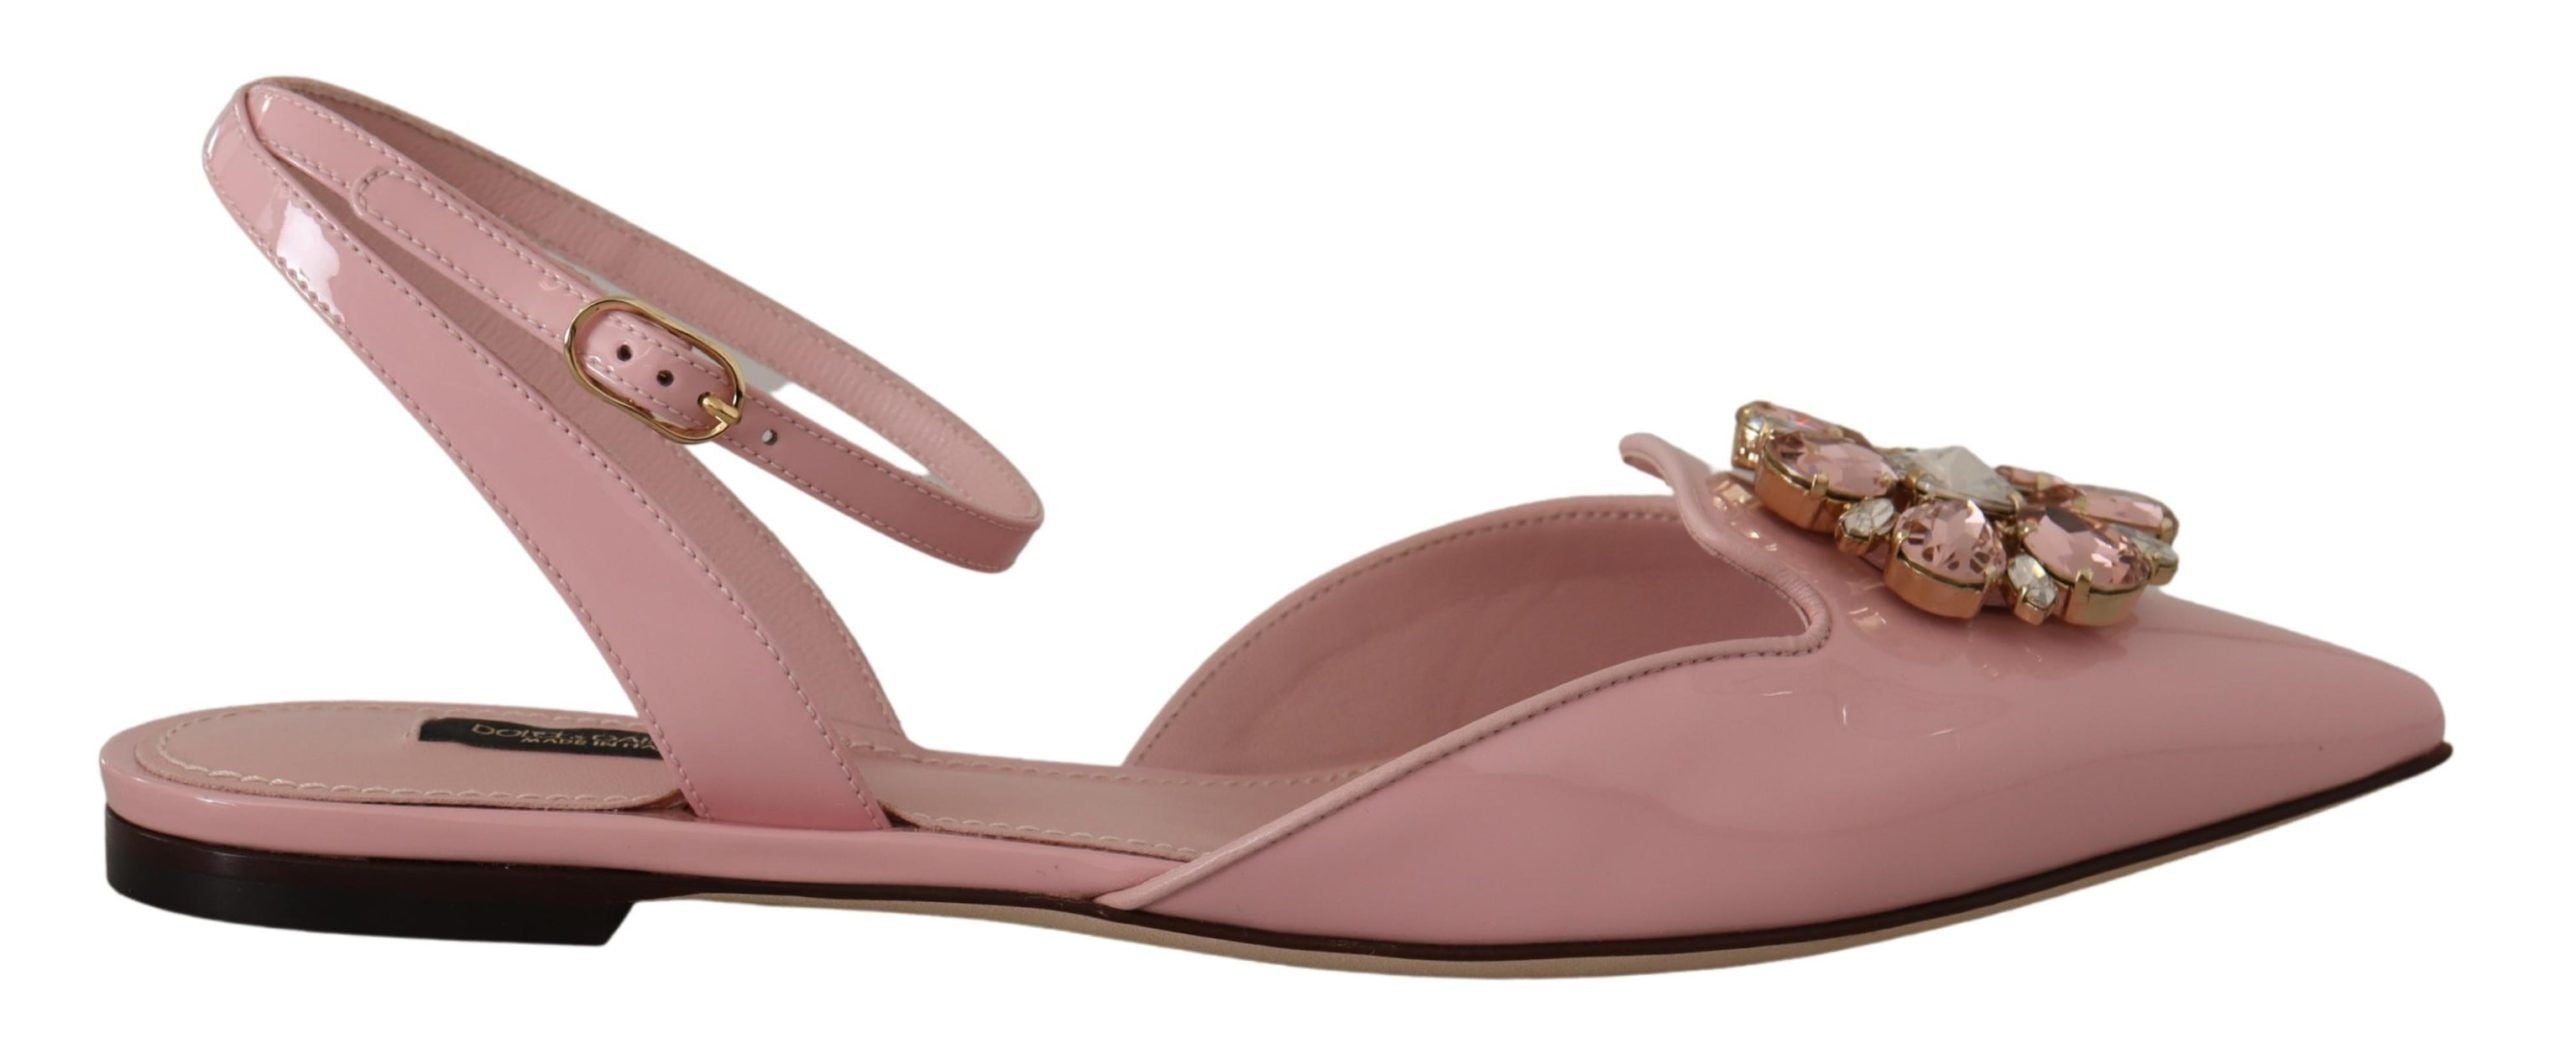 Pink Leather Slingbacks Crystal Pumps Shoes